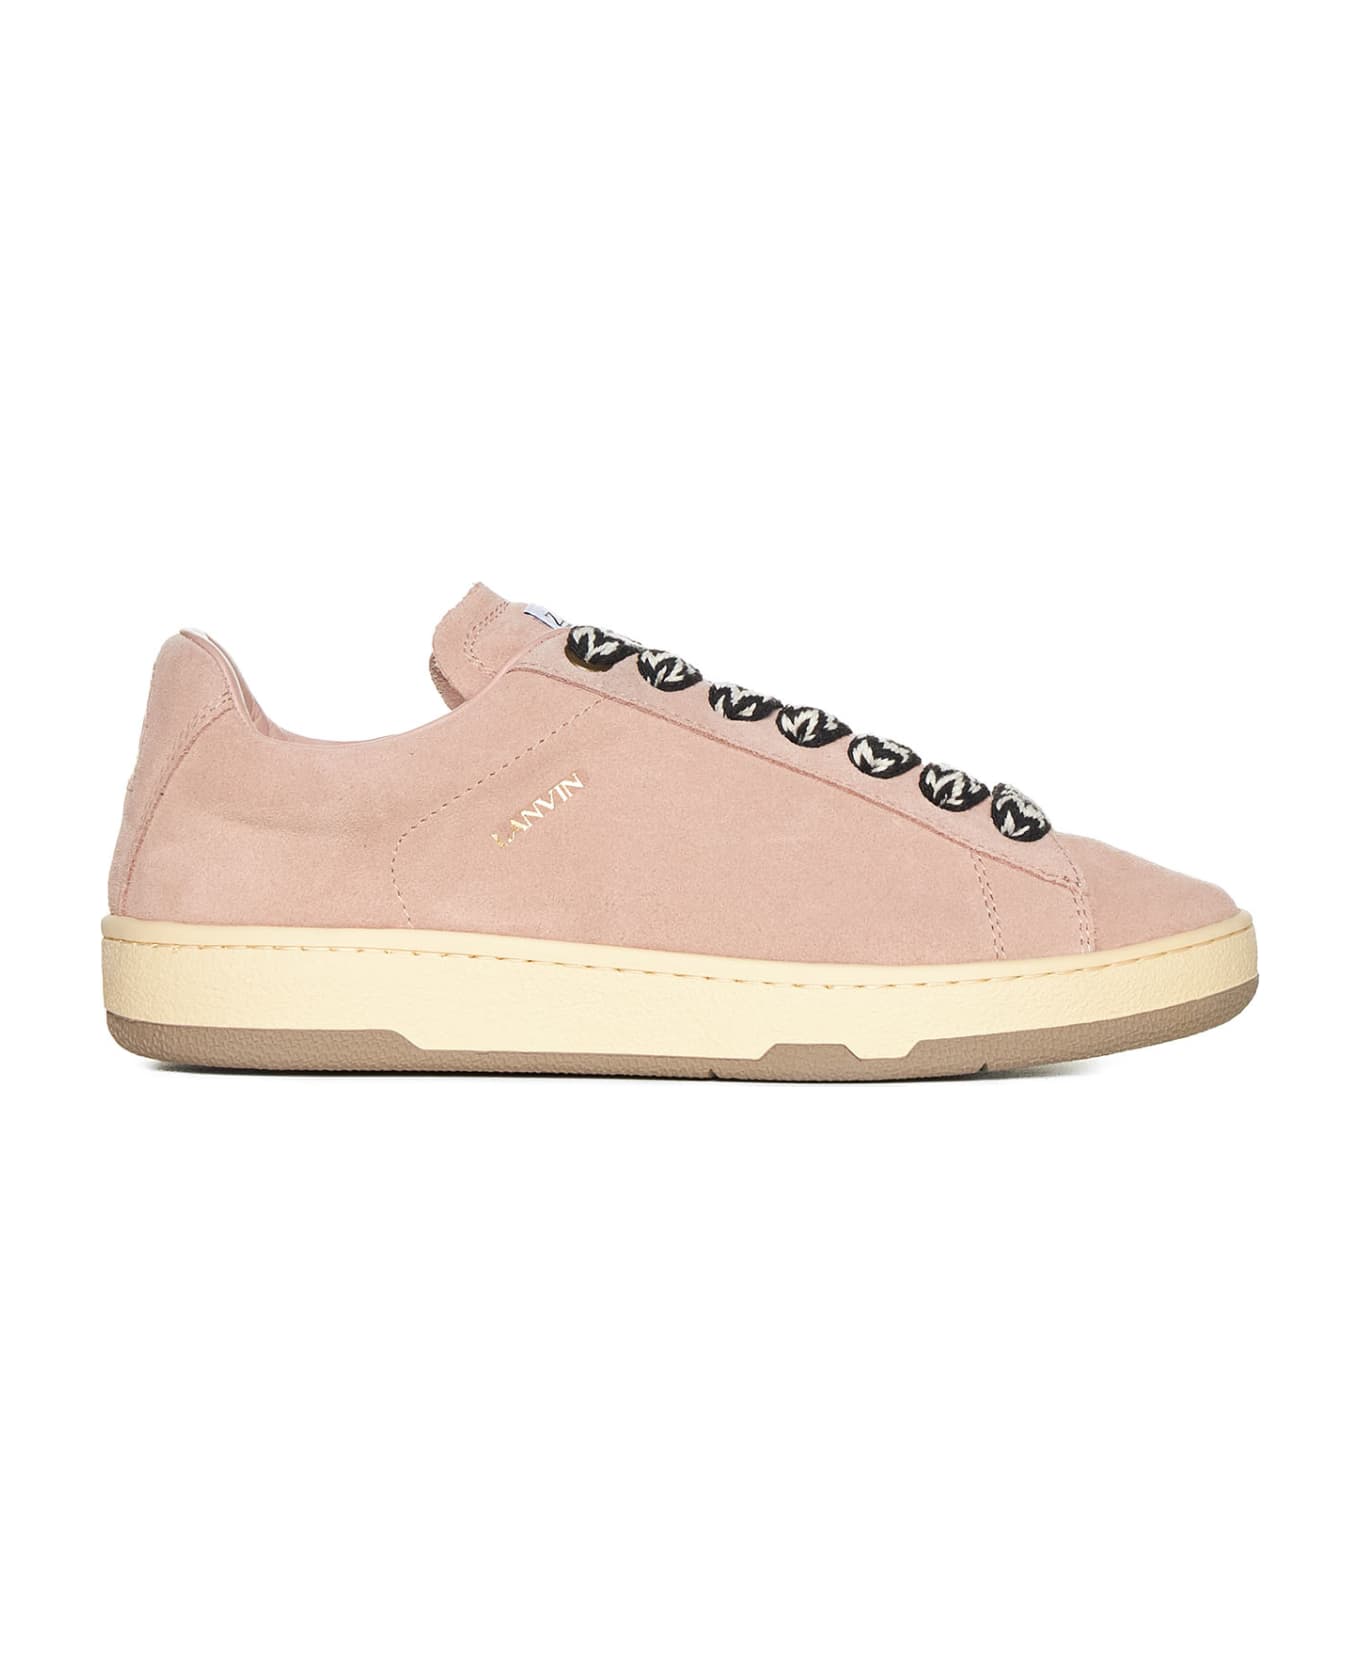 Lanvin Sneakers - Pale Pink スニーカー